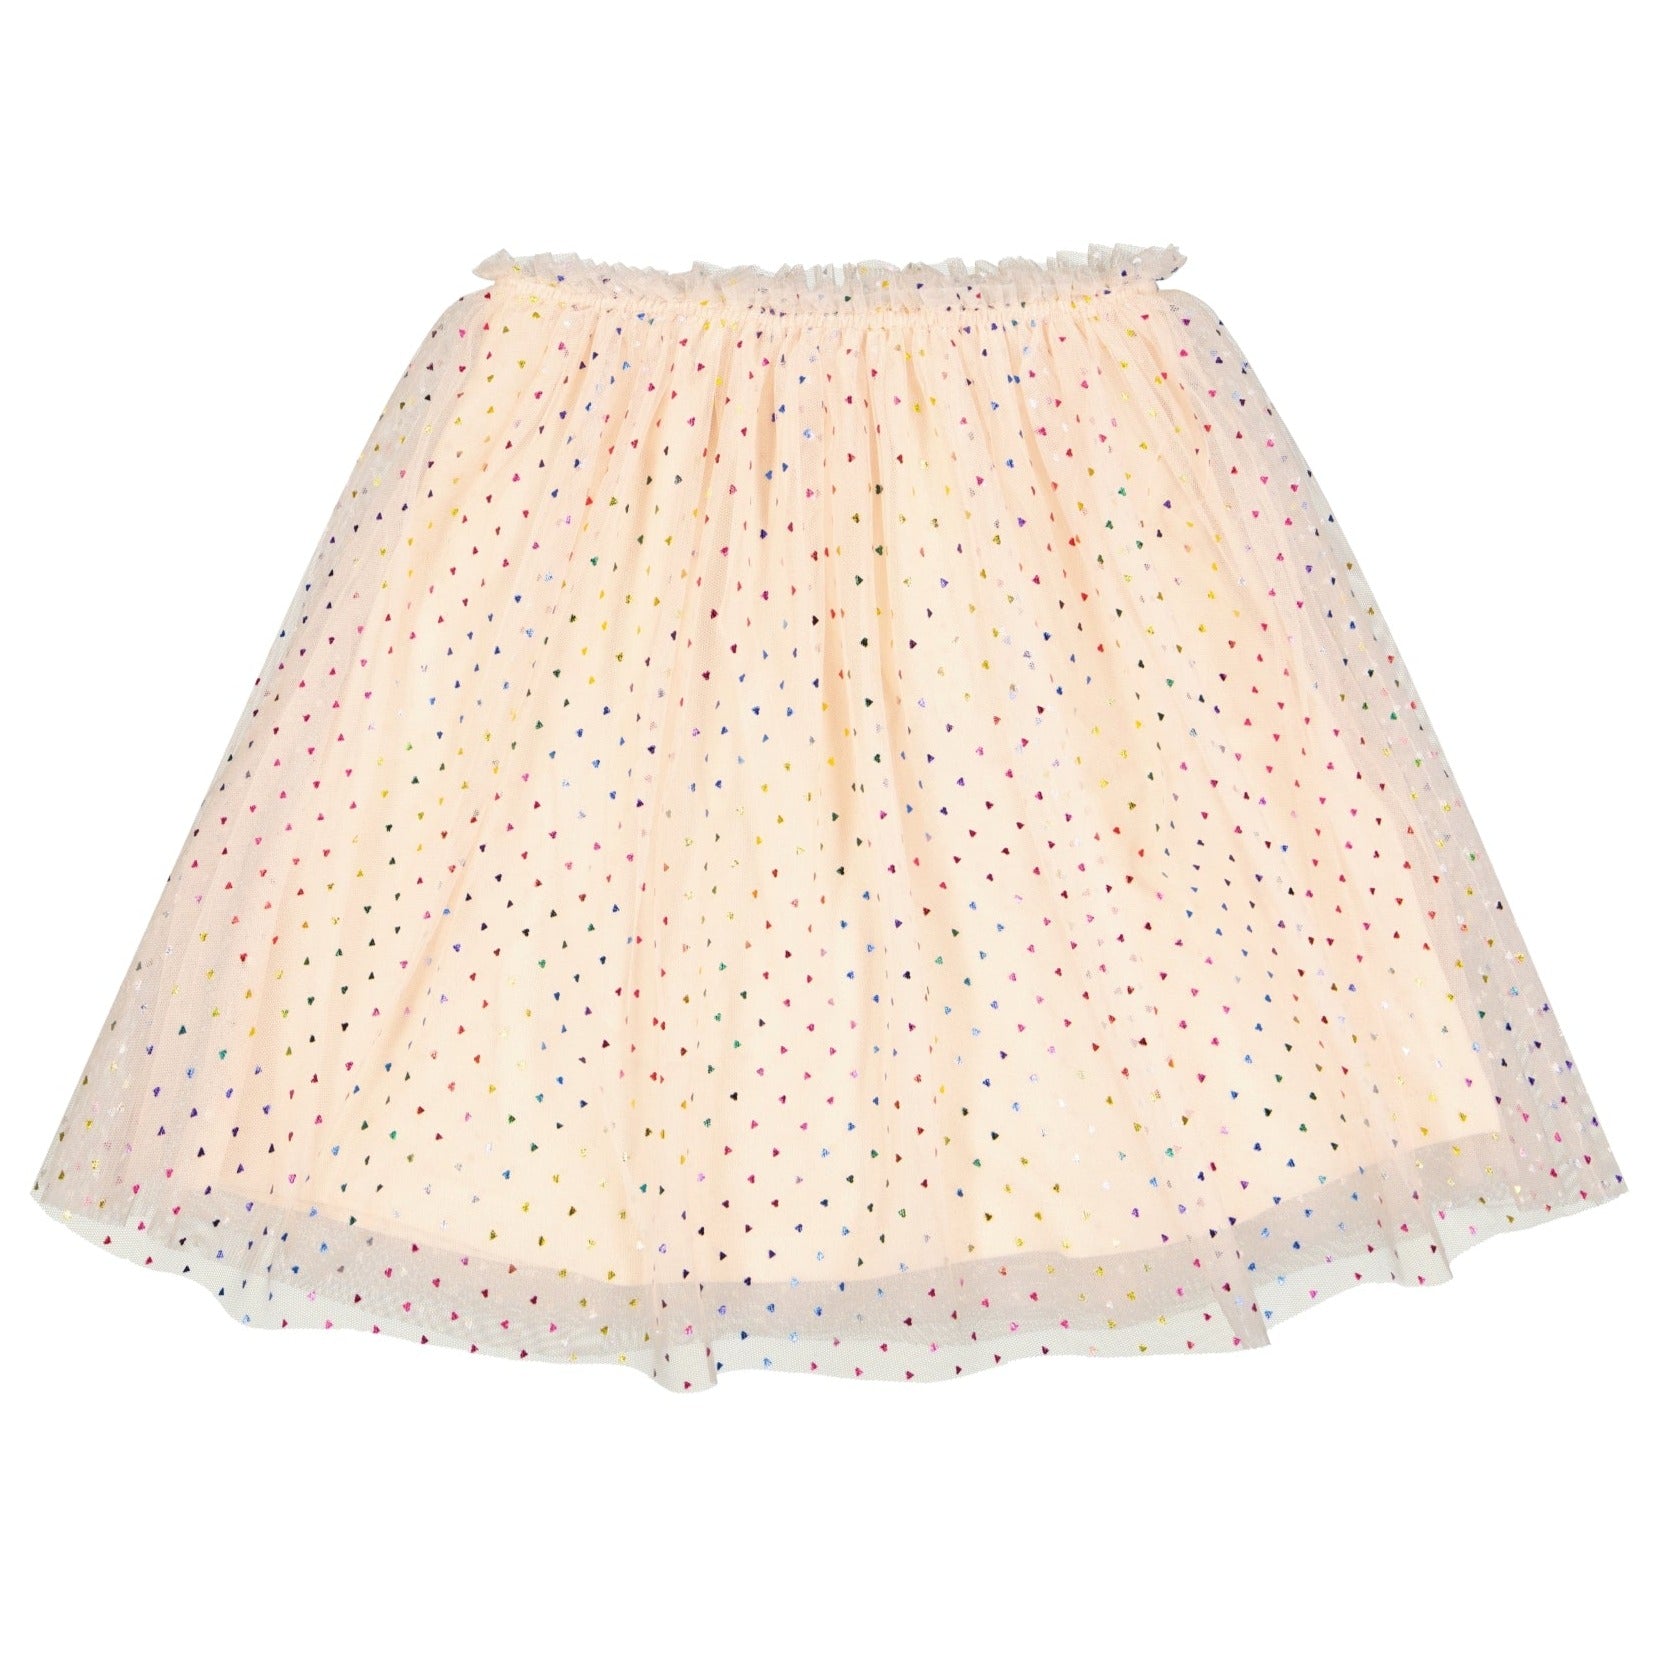 THE NEW - Jovanna Skirt, TN5360 - White Swan